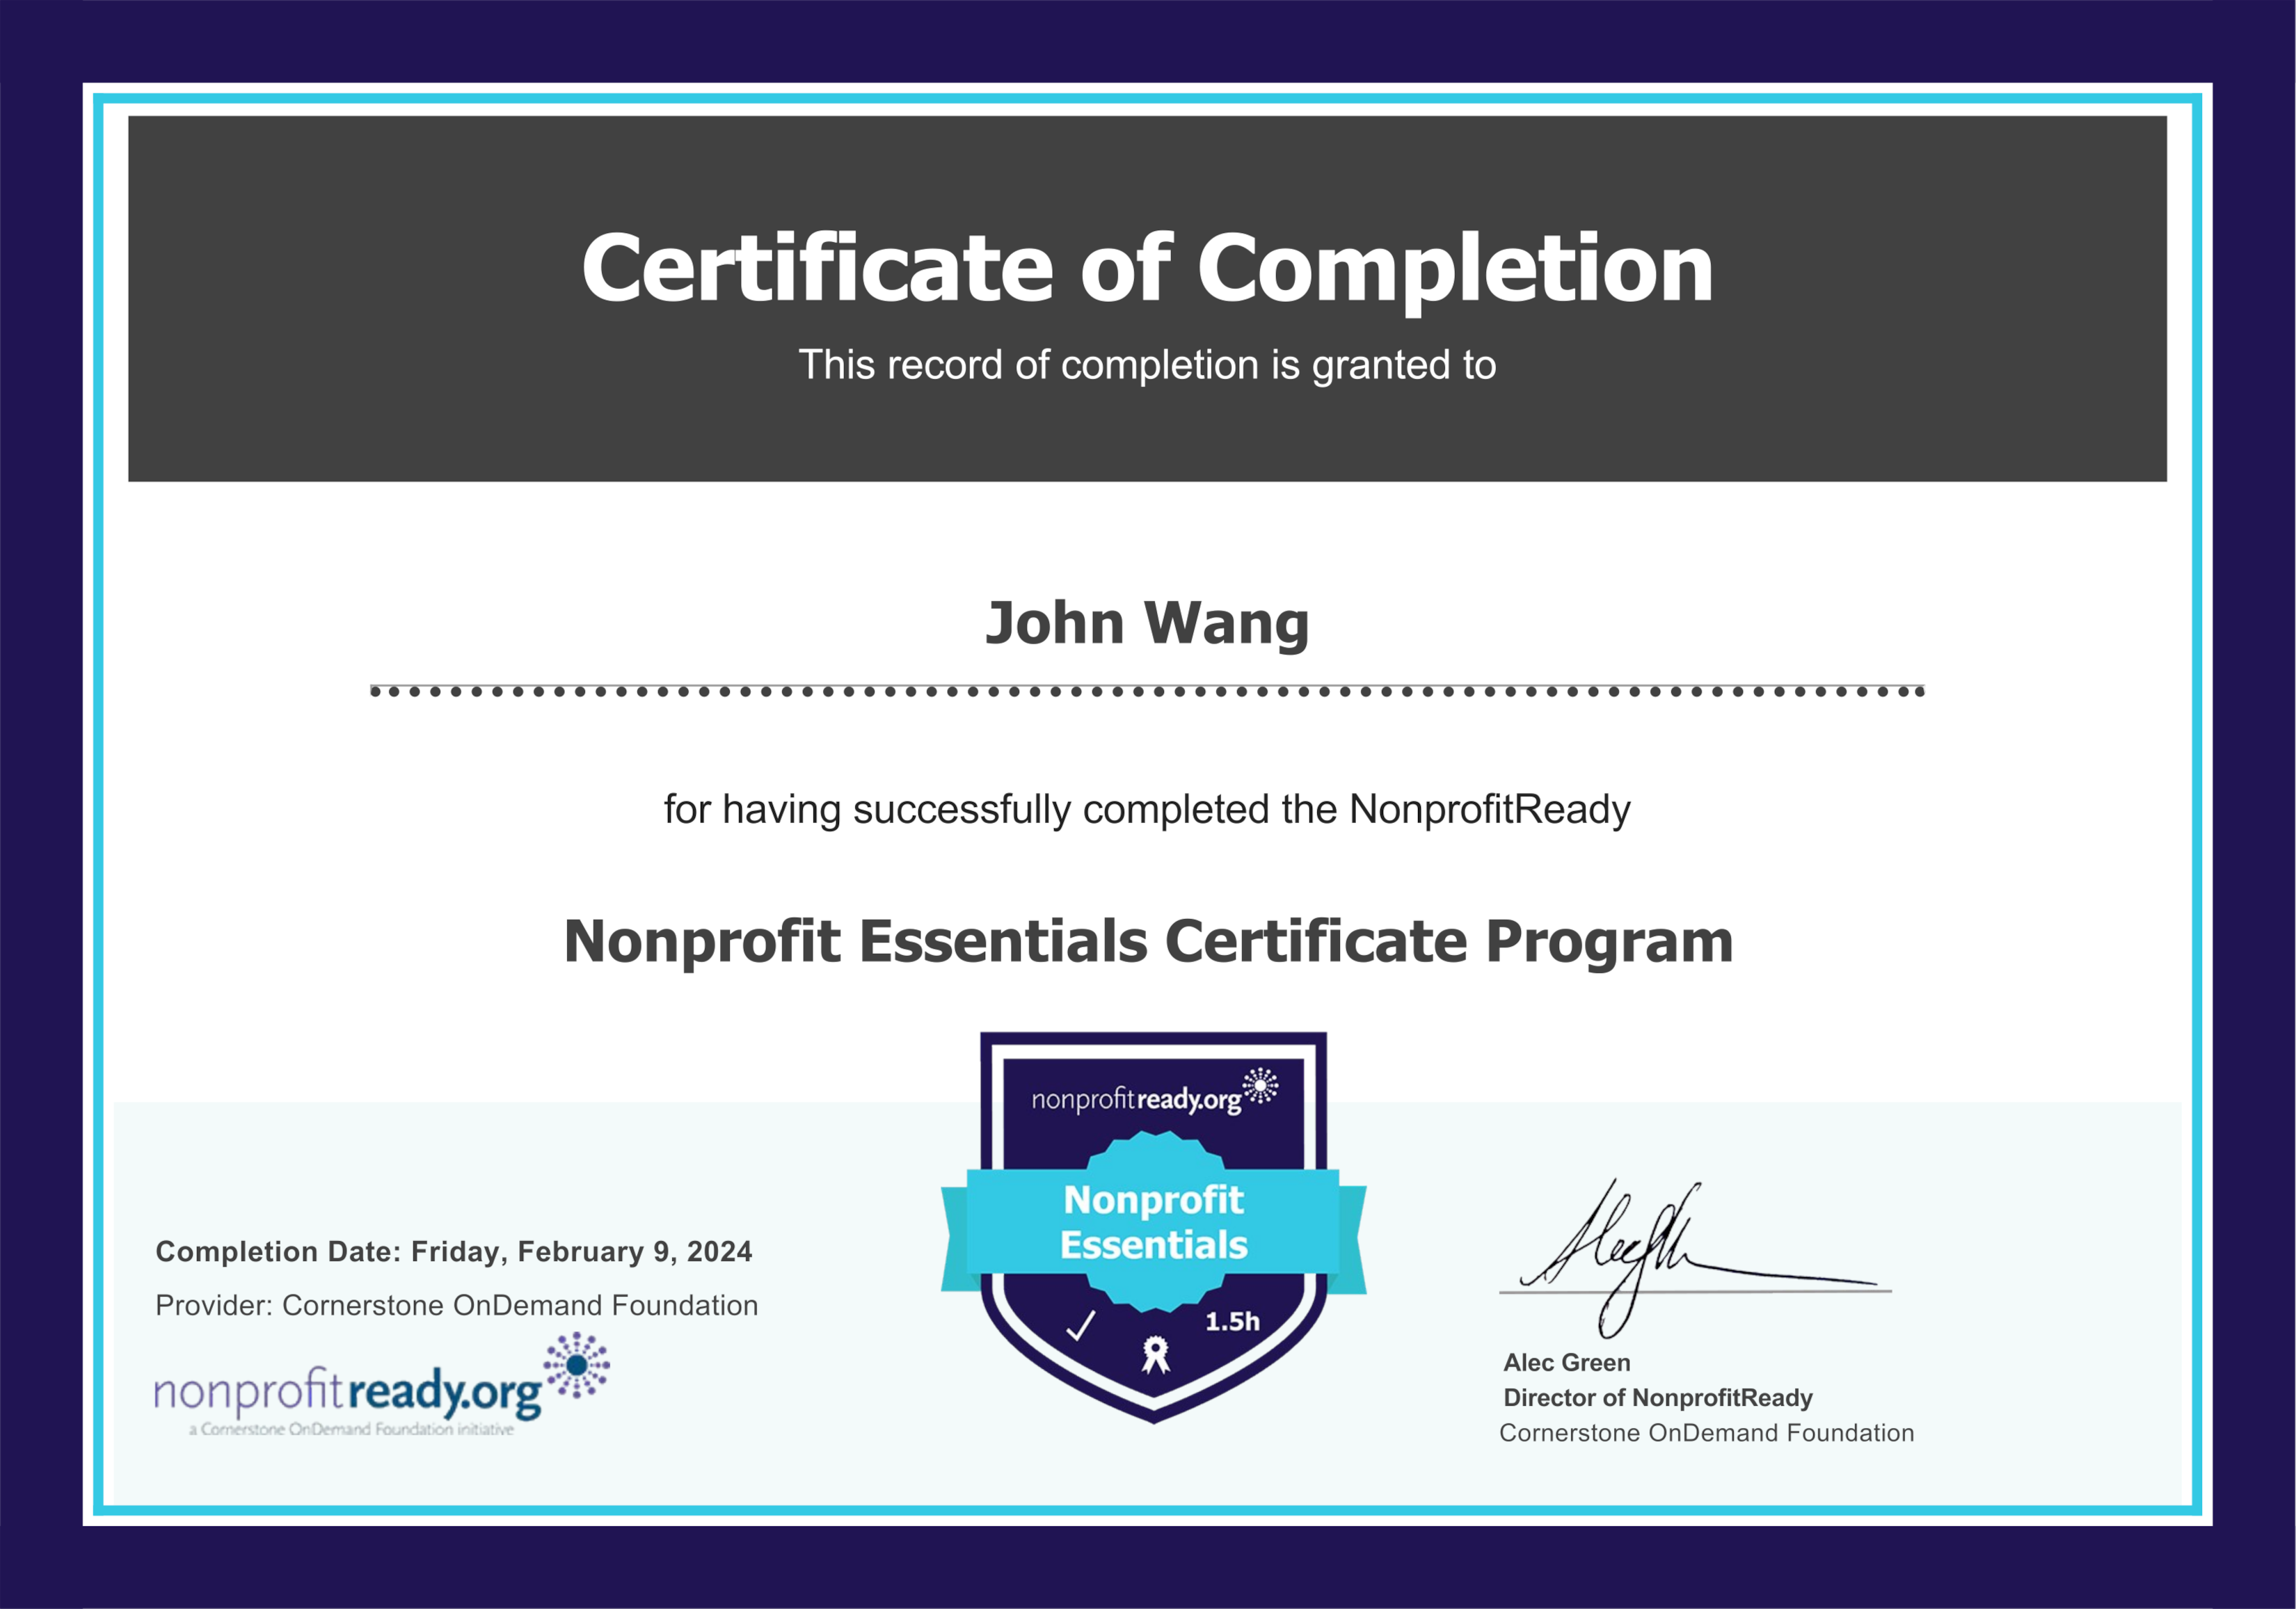 John's Nonprofit Essentials Certificate from Cornerstone OnDemand Foundation